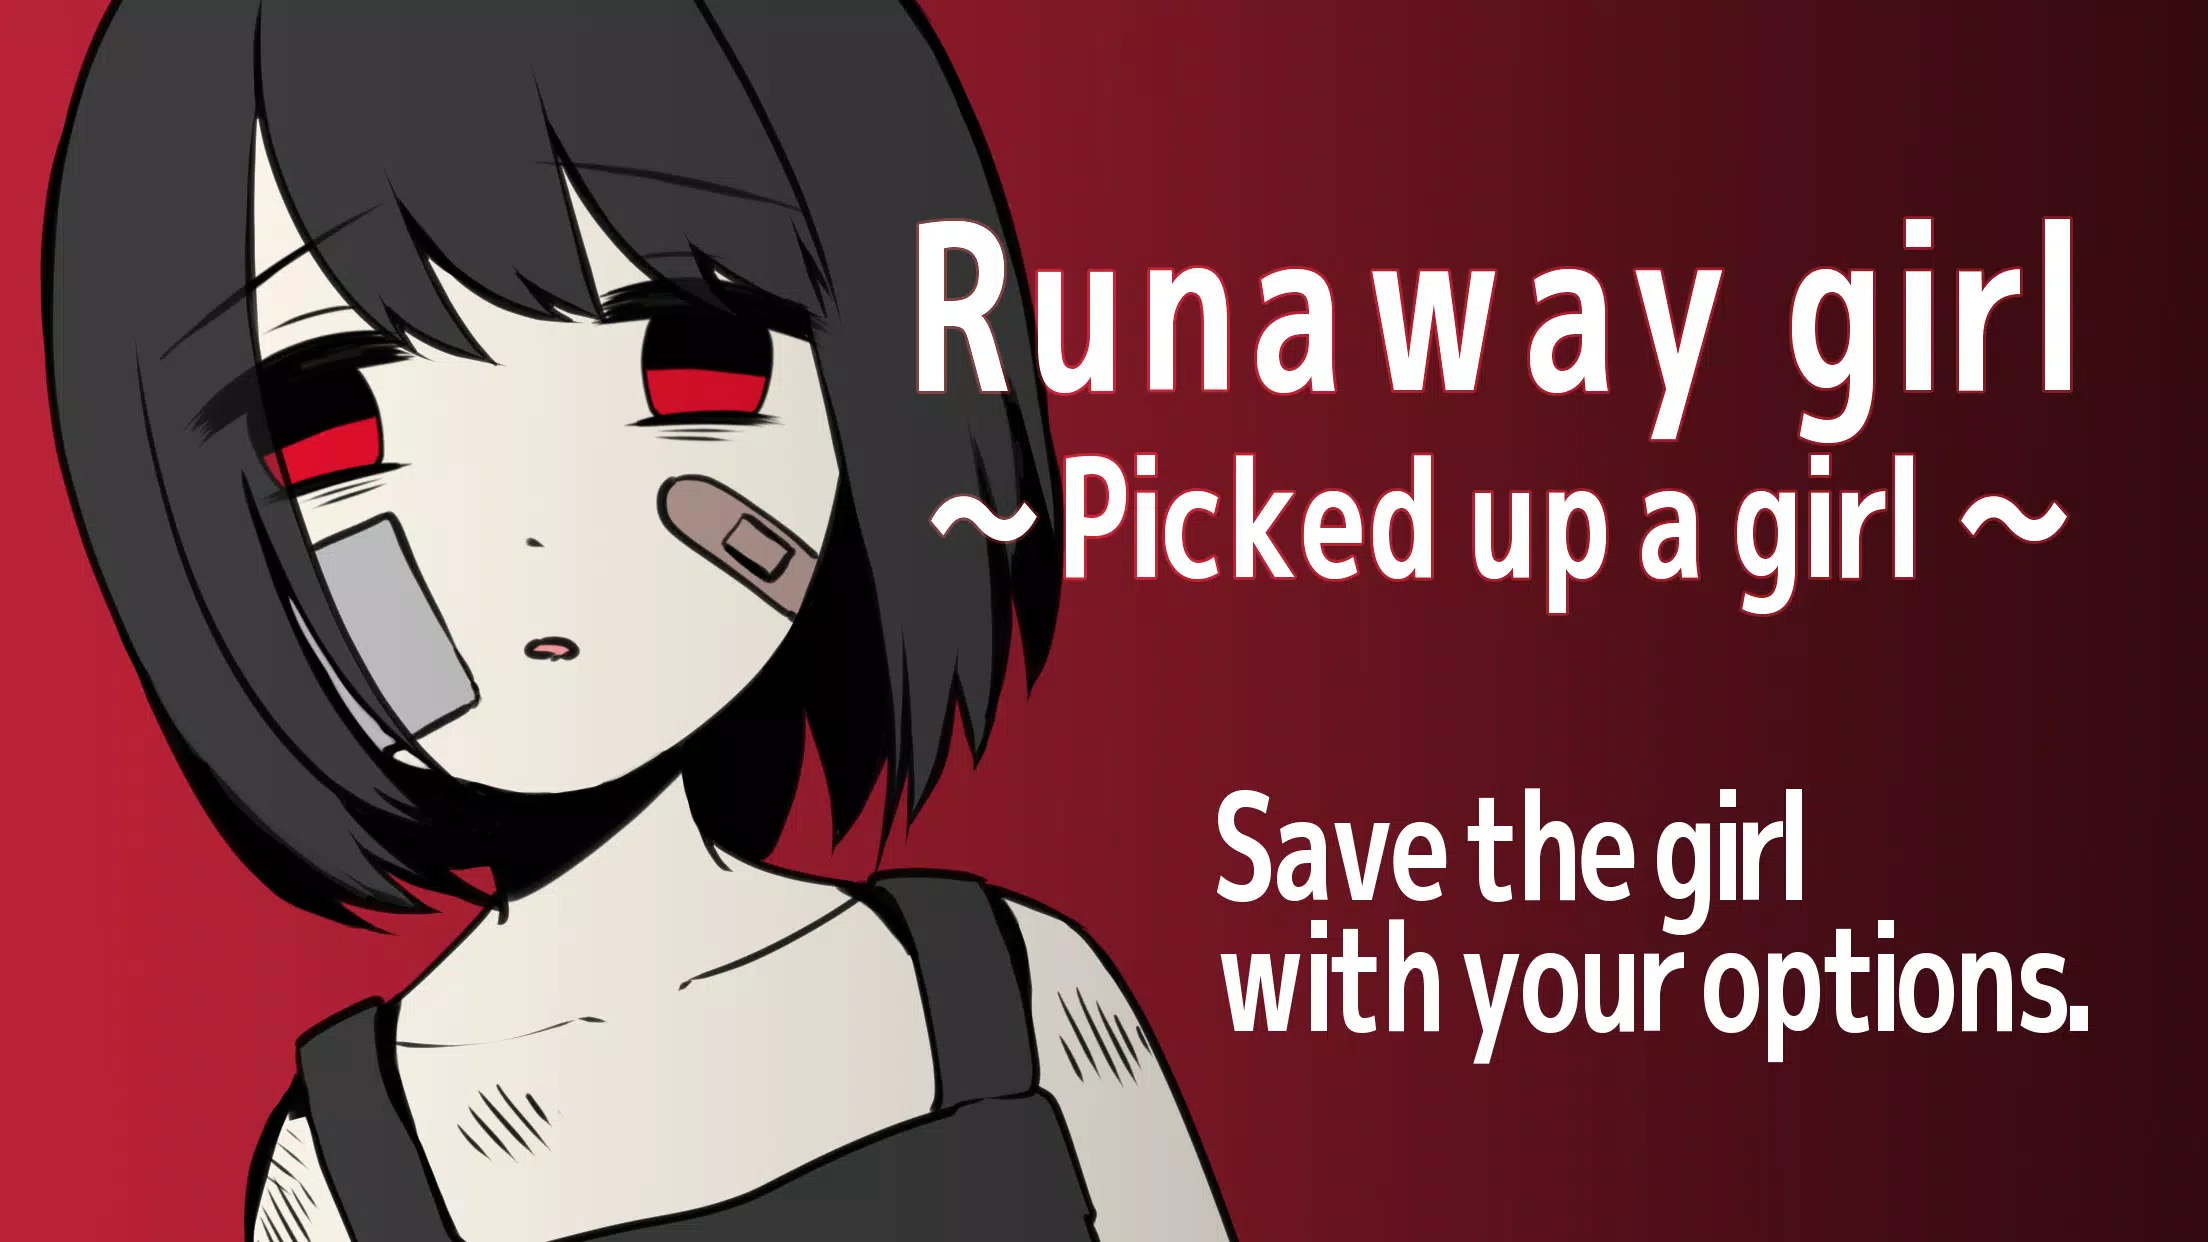 Download do APK de Runaway girl para Android